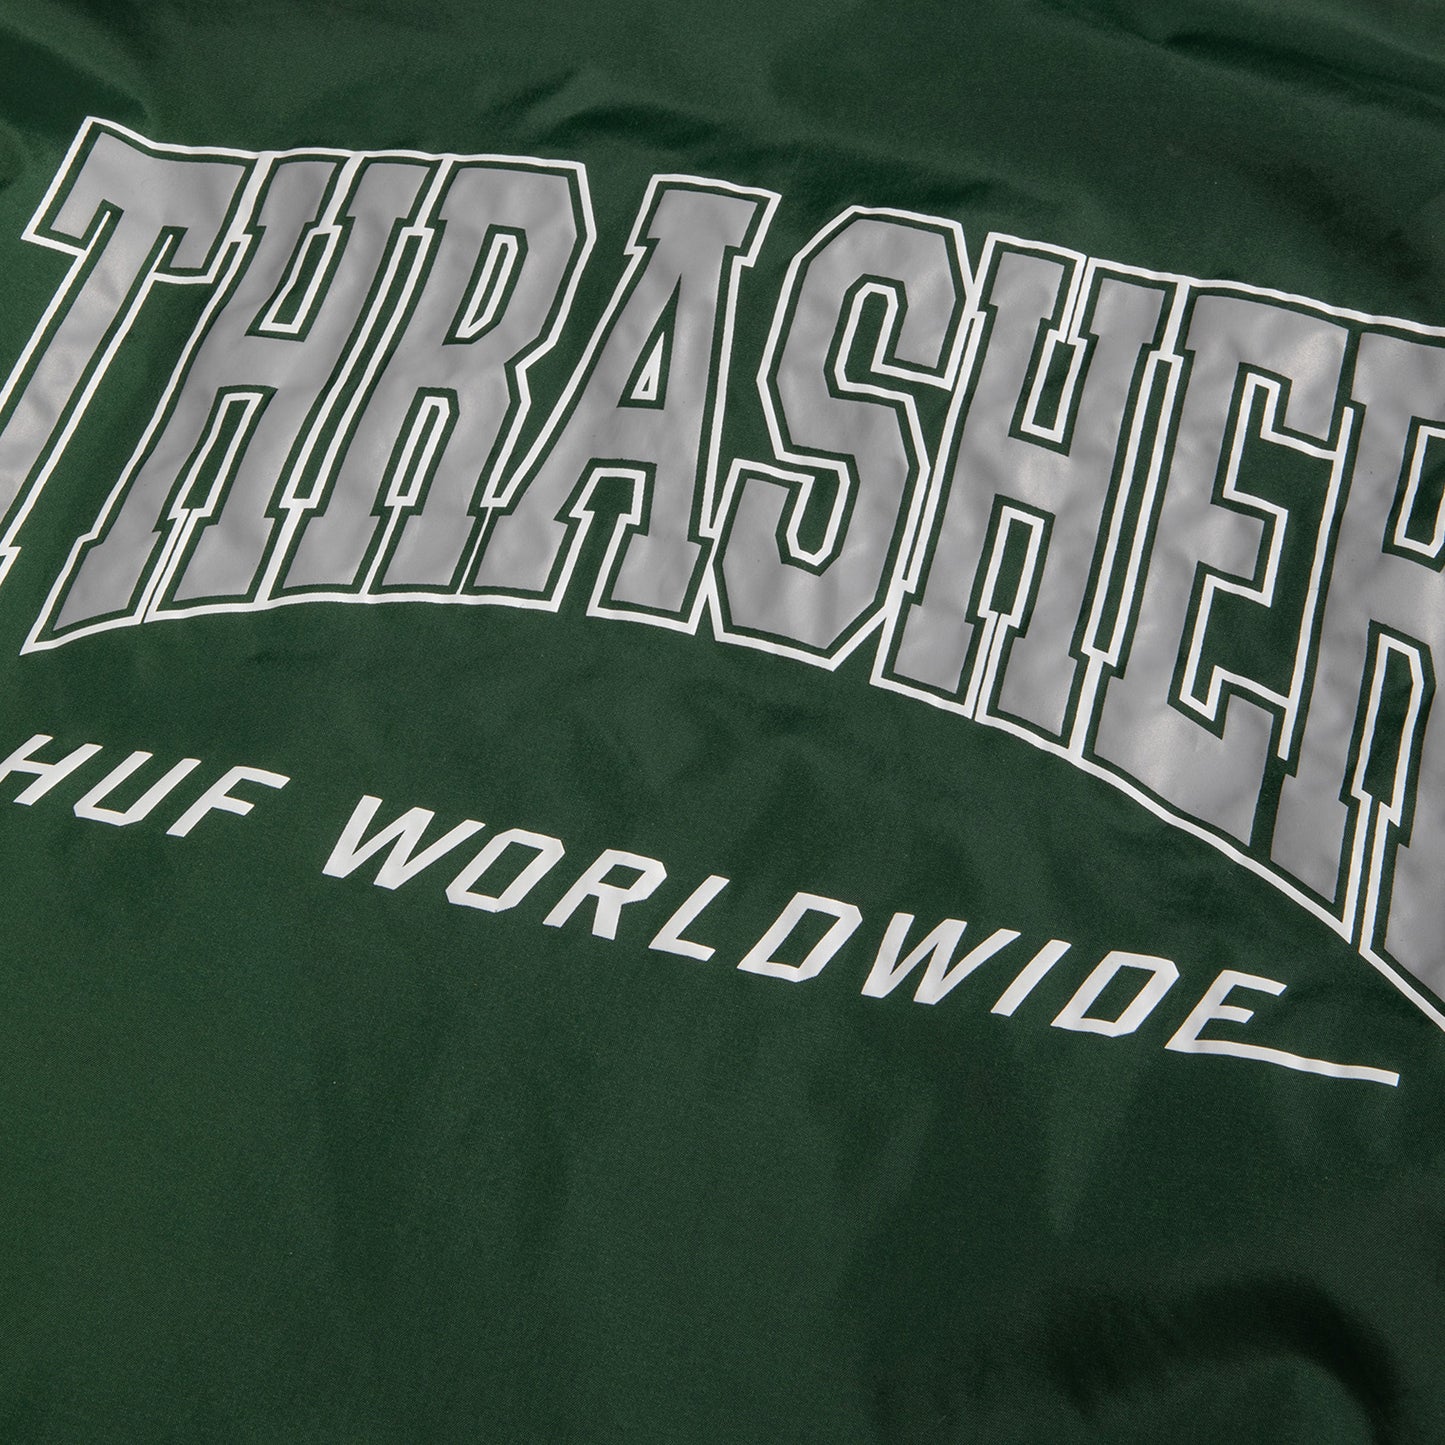 HUF x Thrasher Split Coaches Jacket